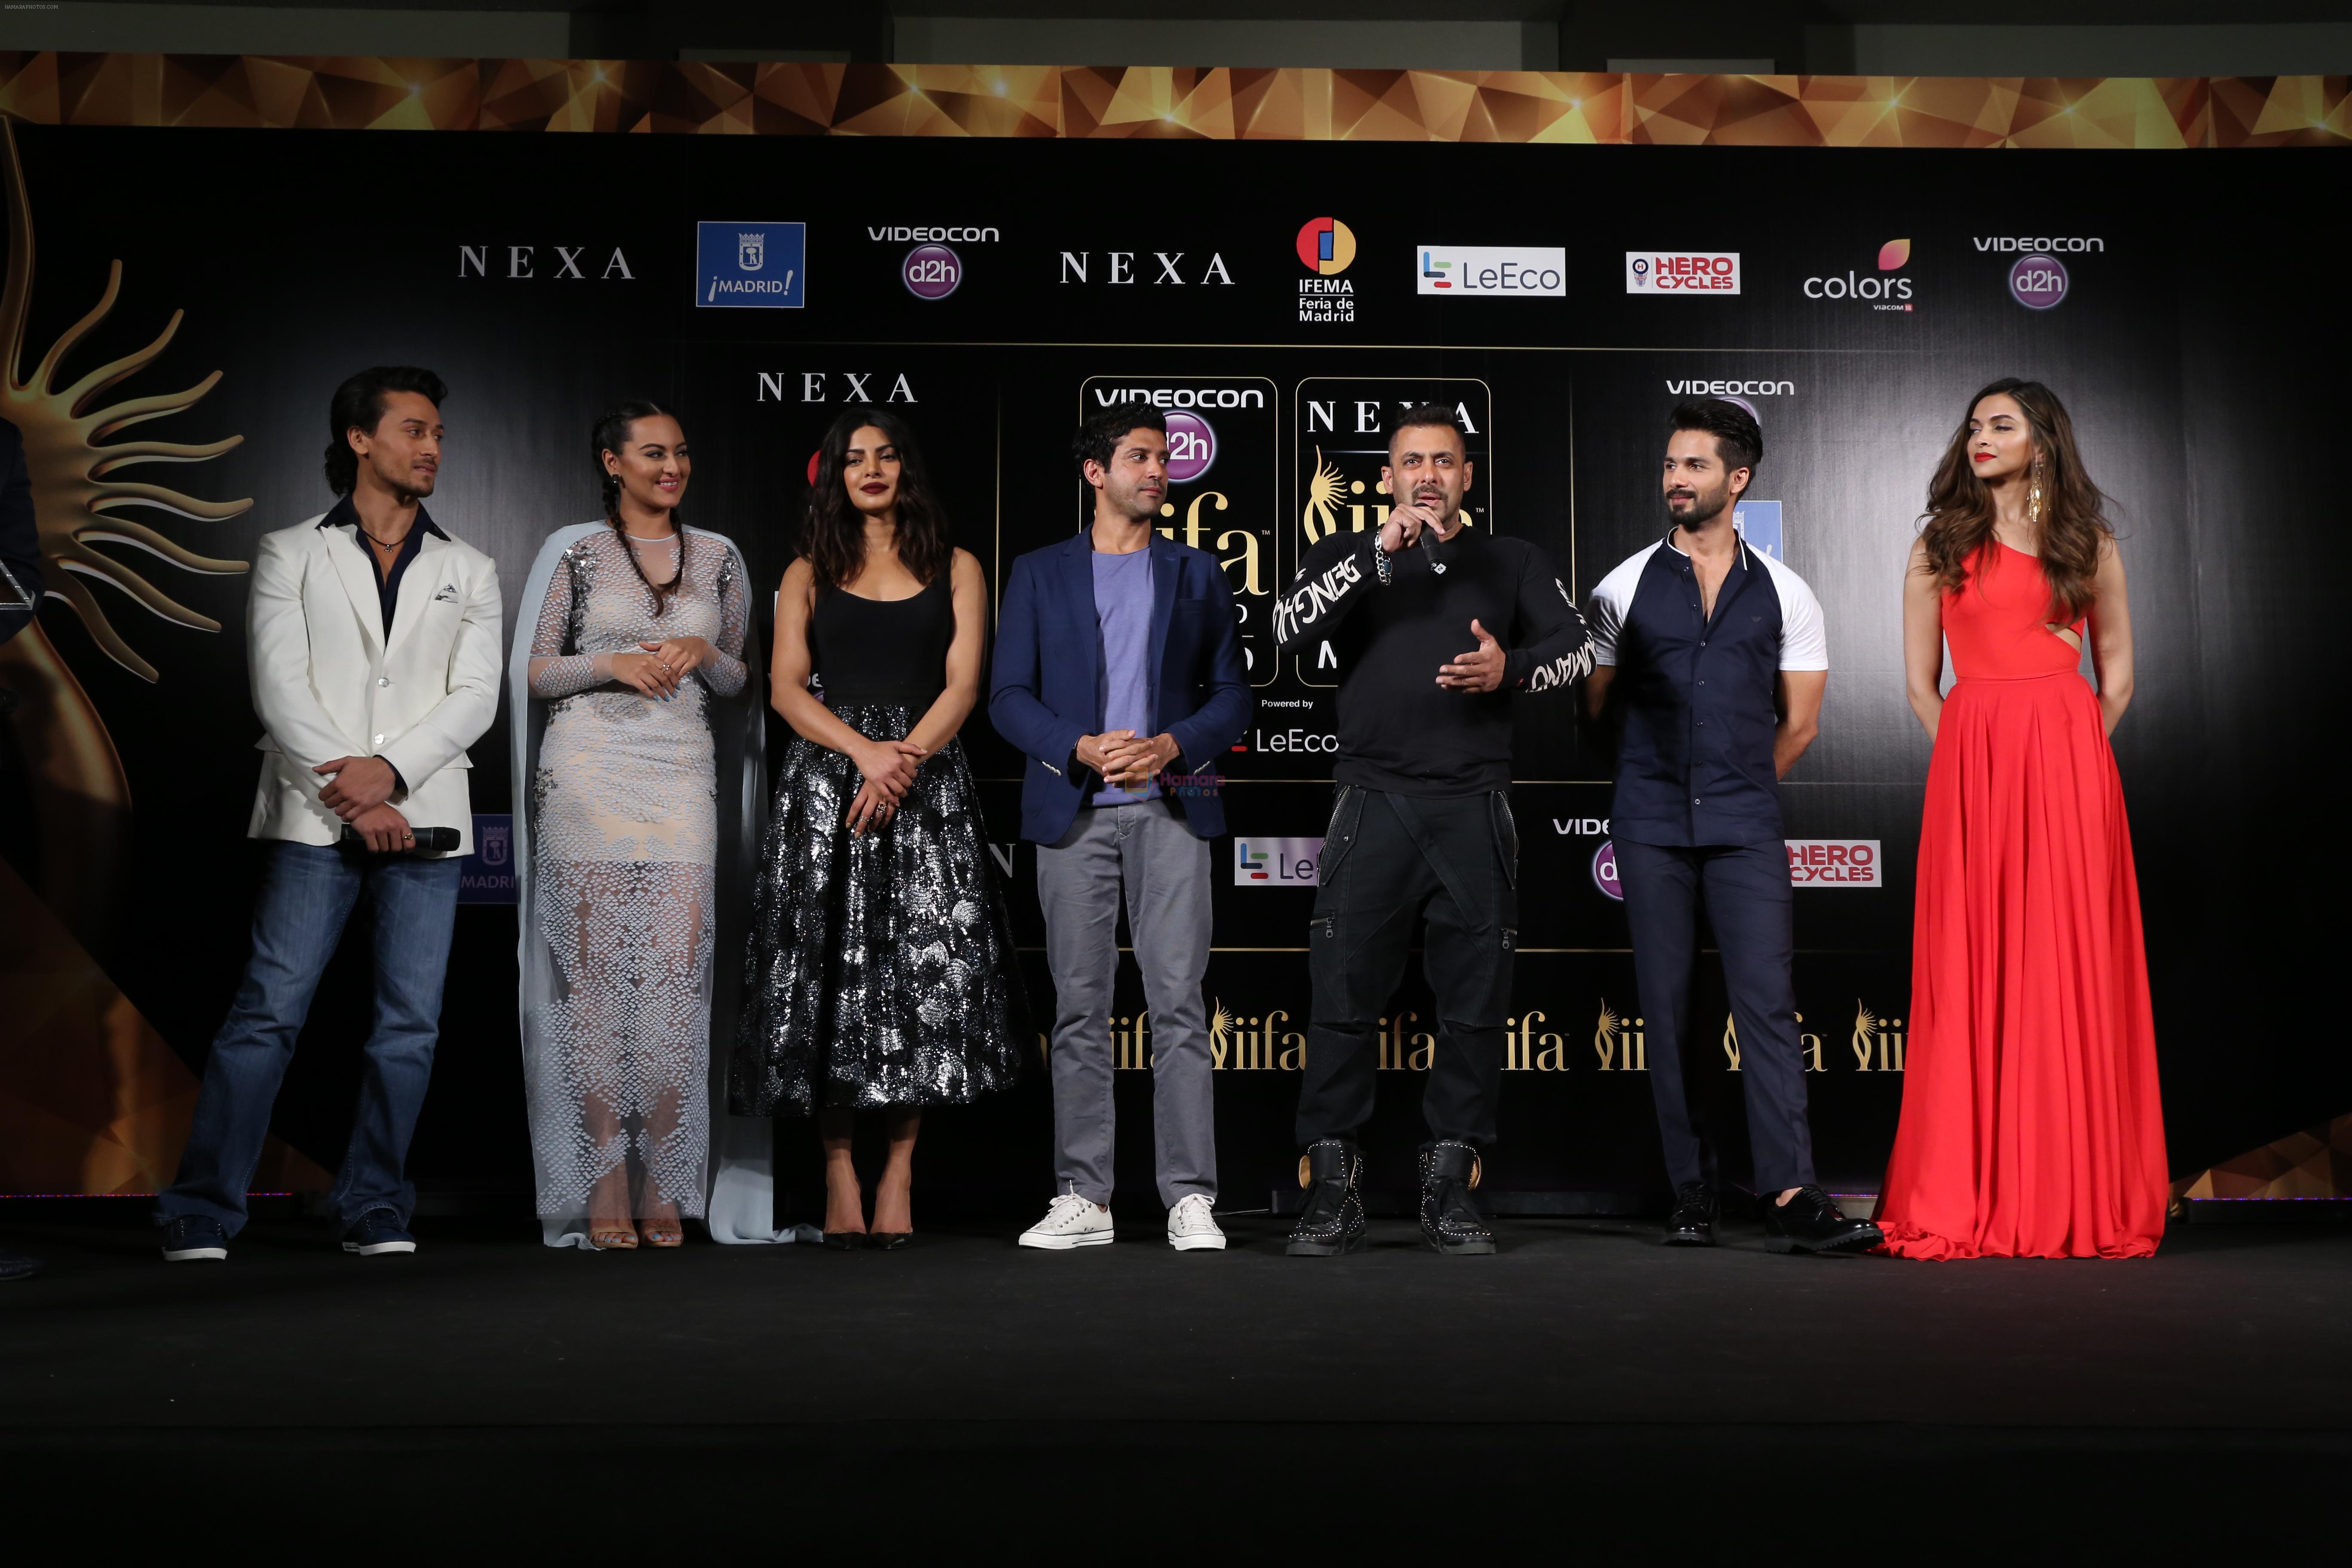 L-R Tiger Shroff, Sonakshi Sinha, Priyanka Chopra, Farhan Akhtar, Salman Khan, Shahid Kapoor and Deepika Padukone at the IIFA 2016 Opening Press Conference in Madrid